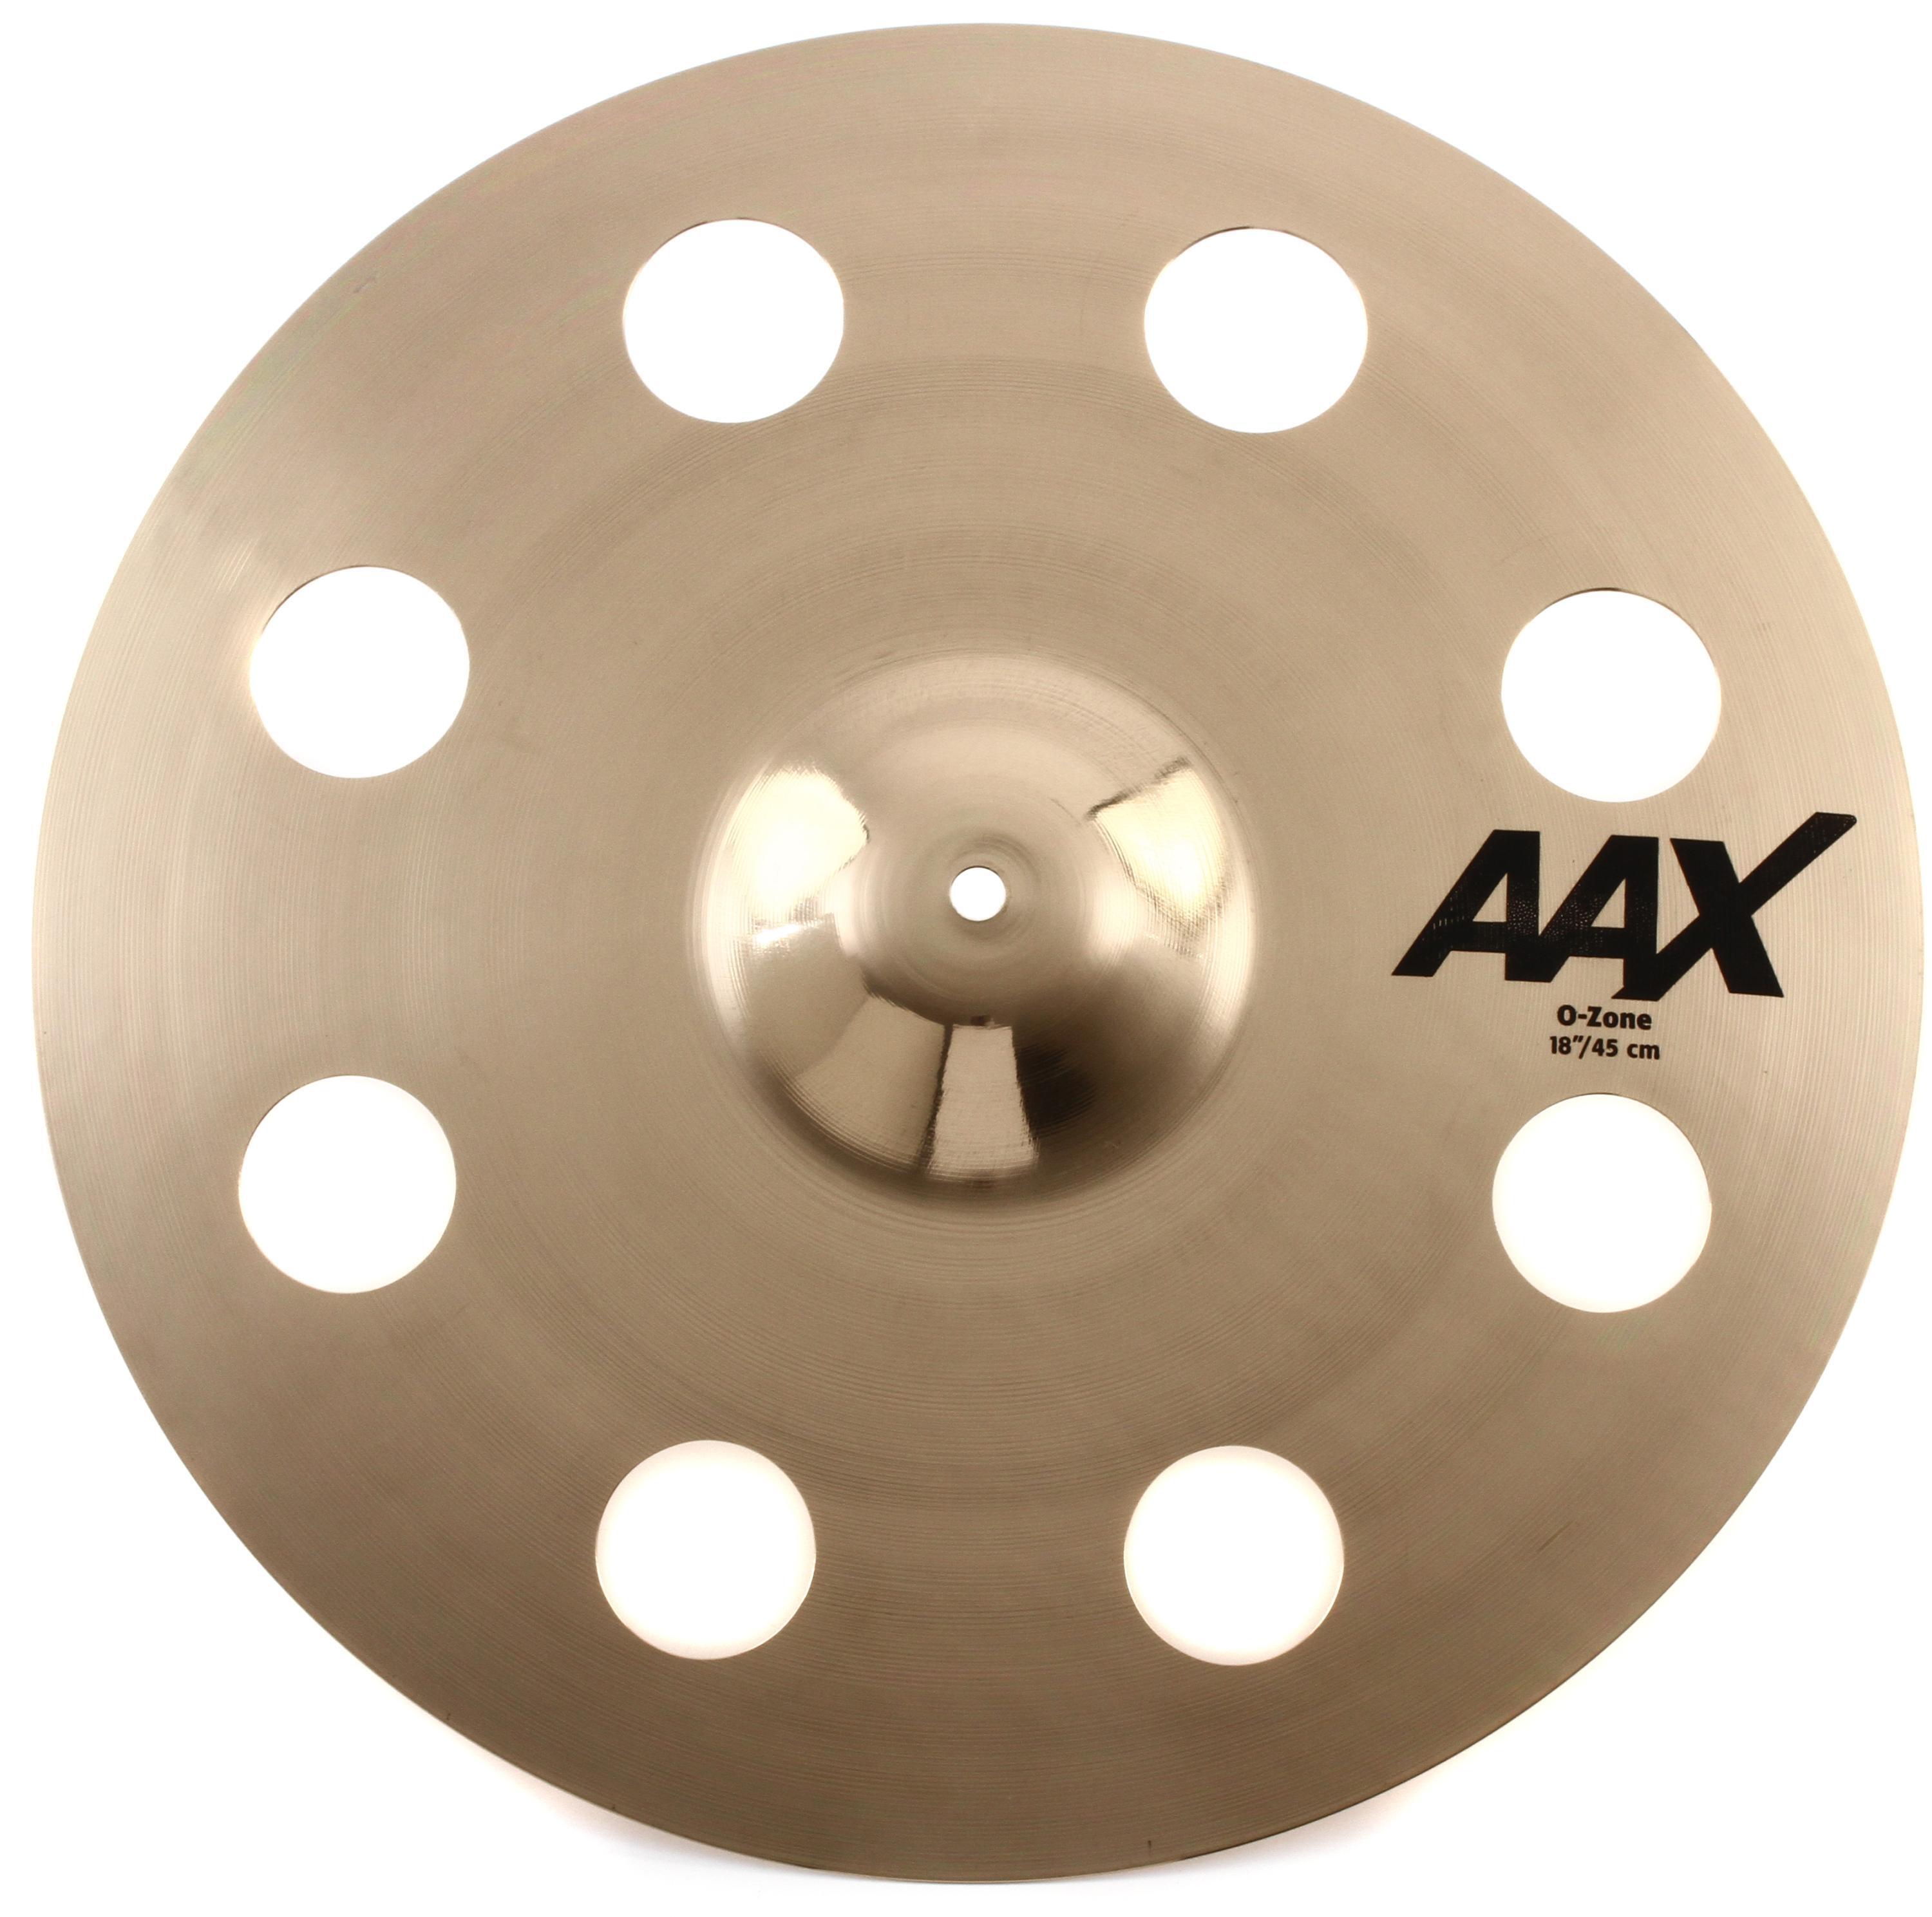 Sabian 18 inch AAX O-Zone Crash Cymbal - Brilliant Finish